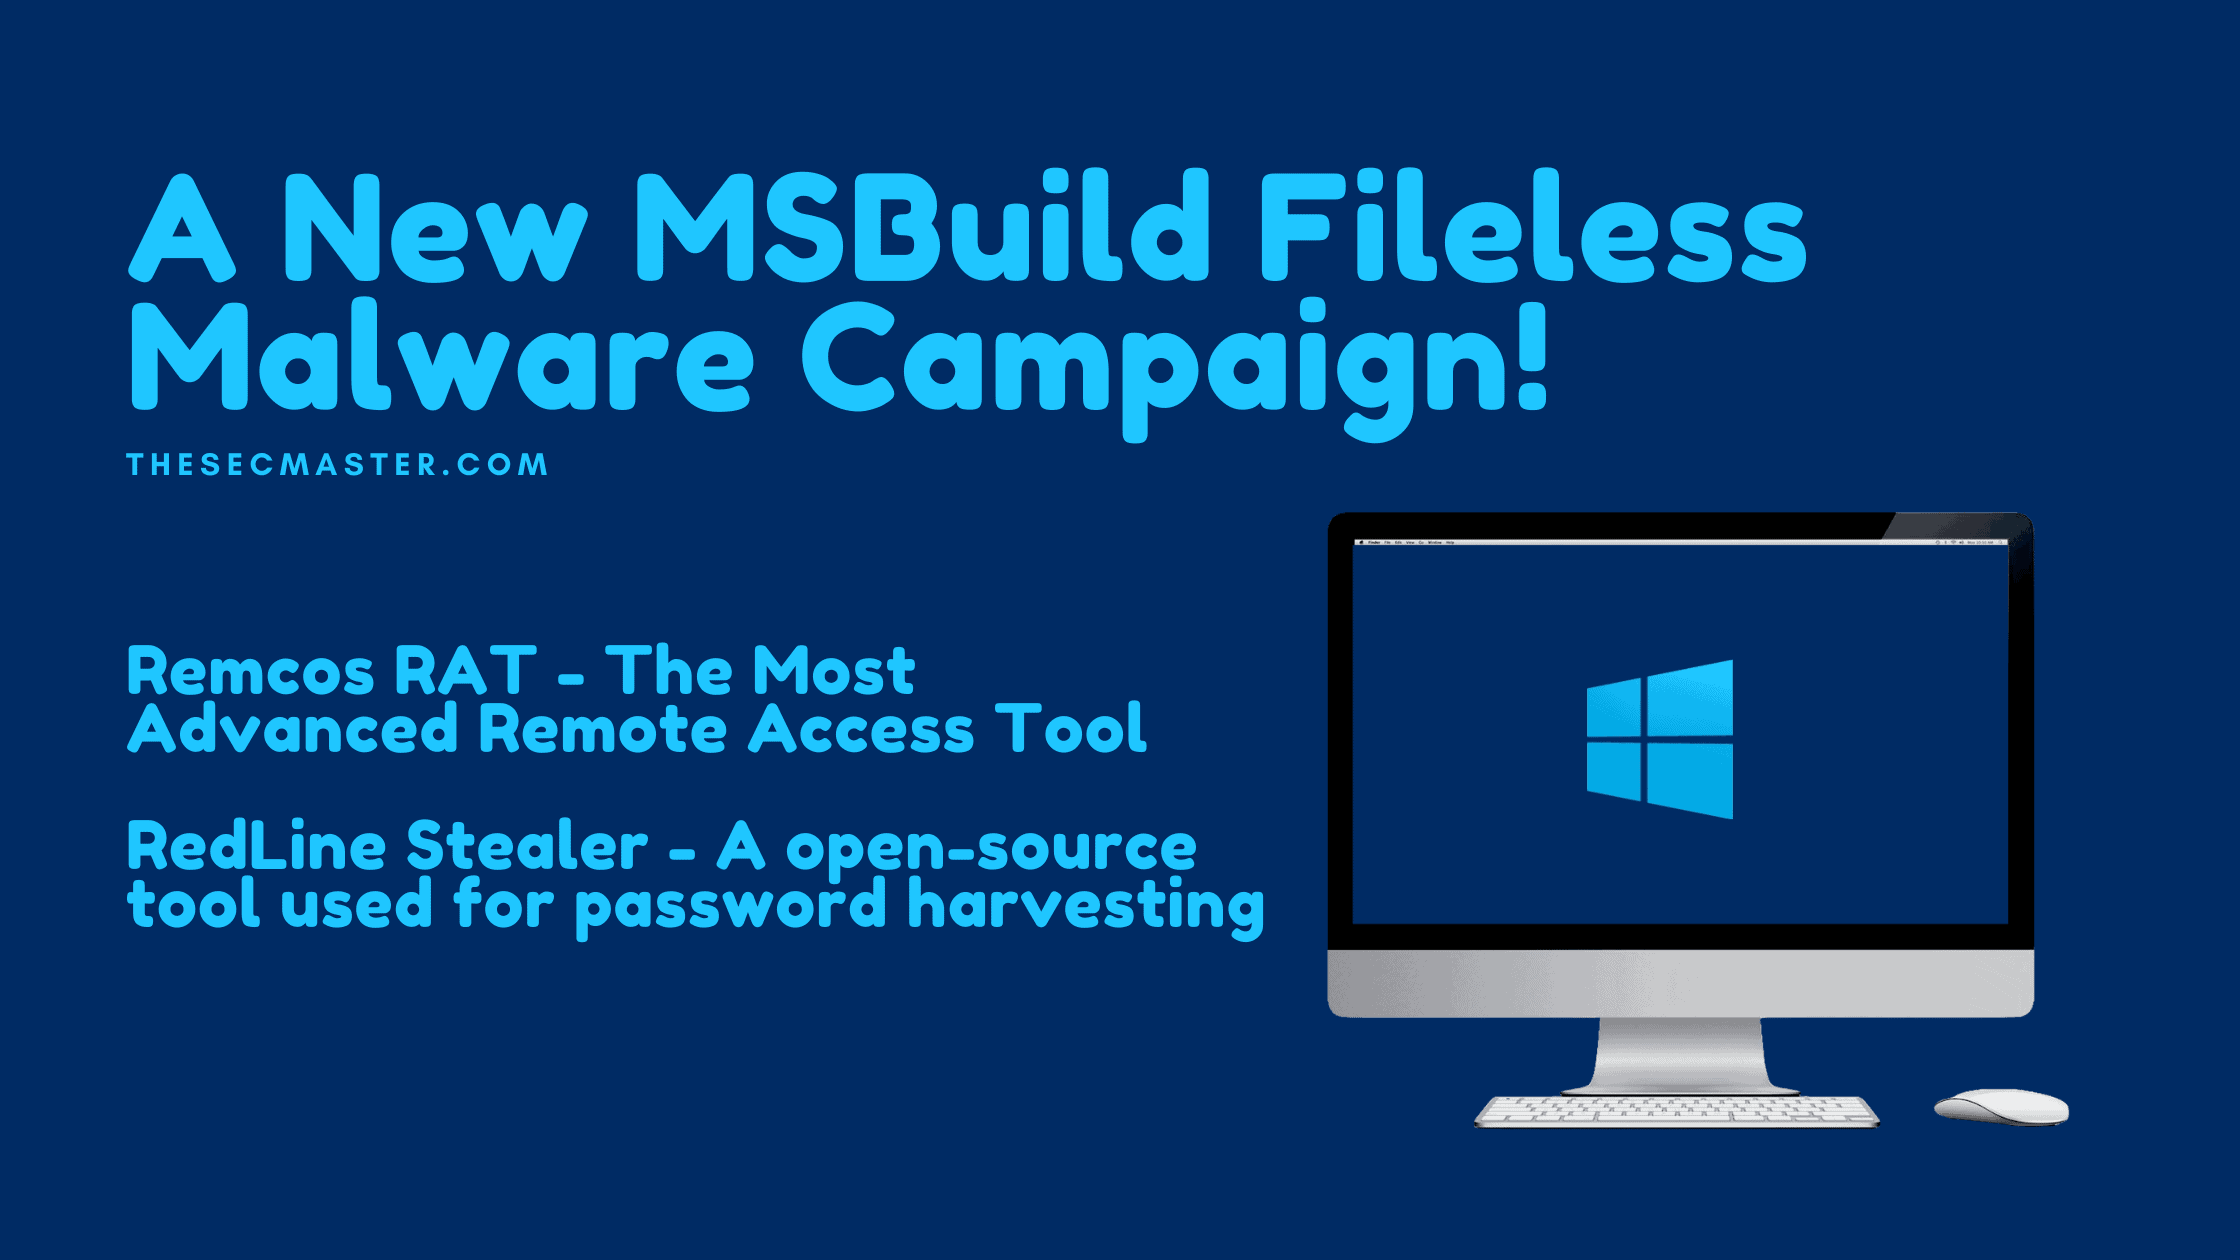 A New Msbuild Fileless Malware Campaign